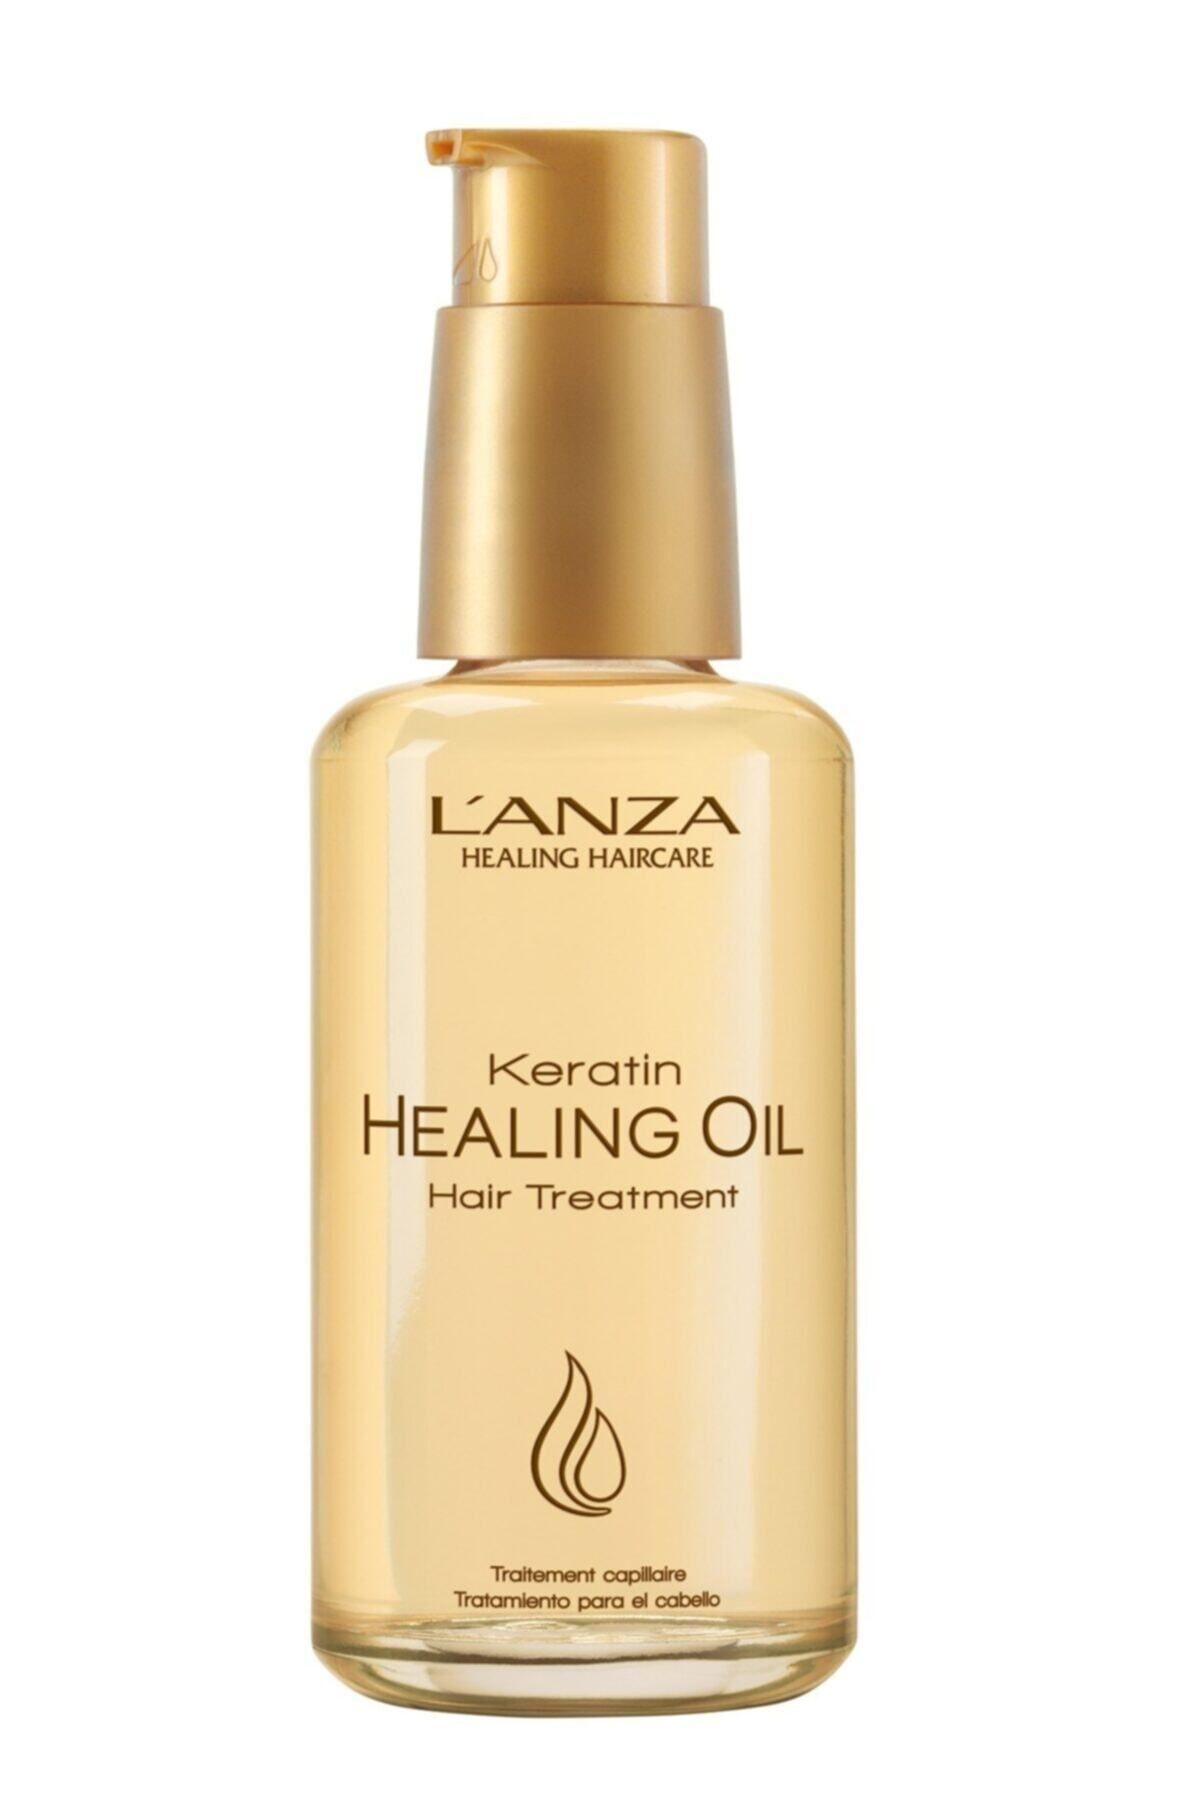 L'anza Keratin Healing Oil Hair Treatment Danışman K. -3535-